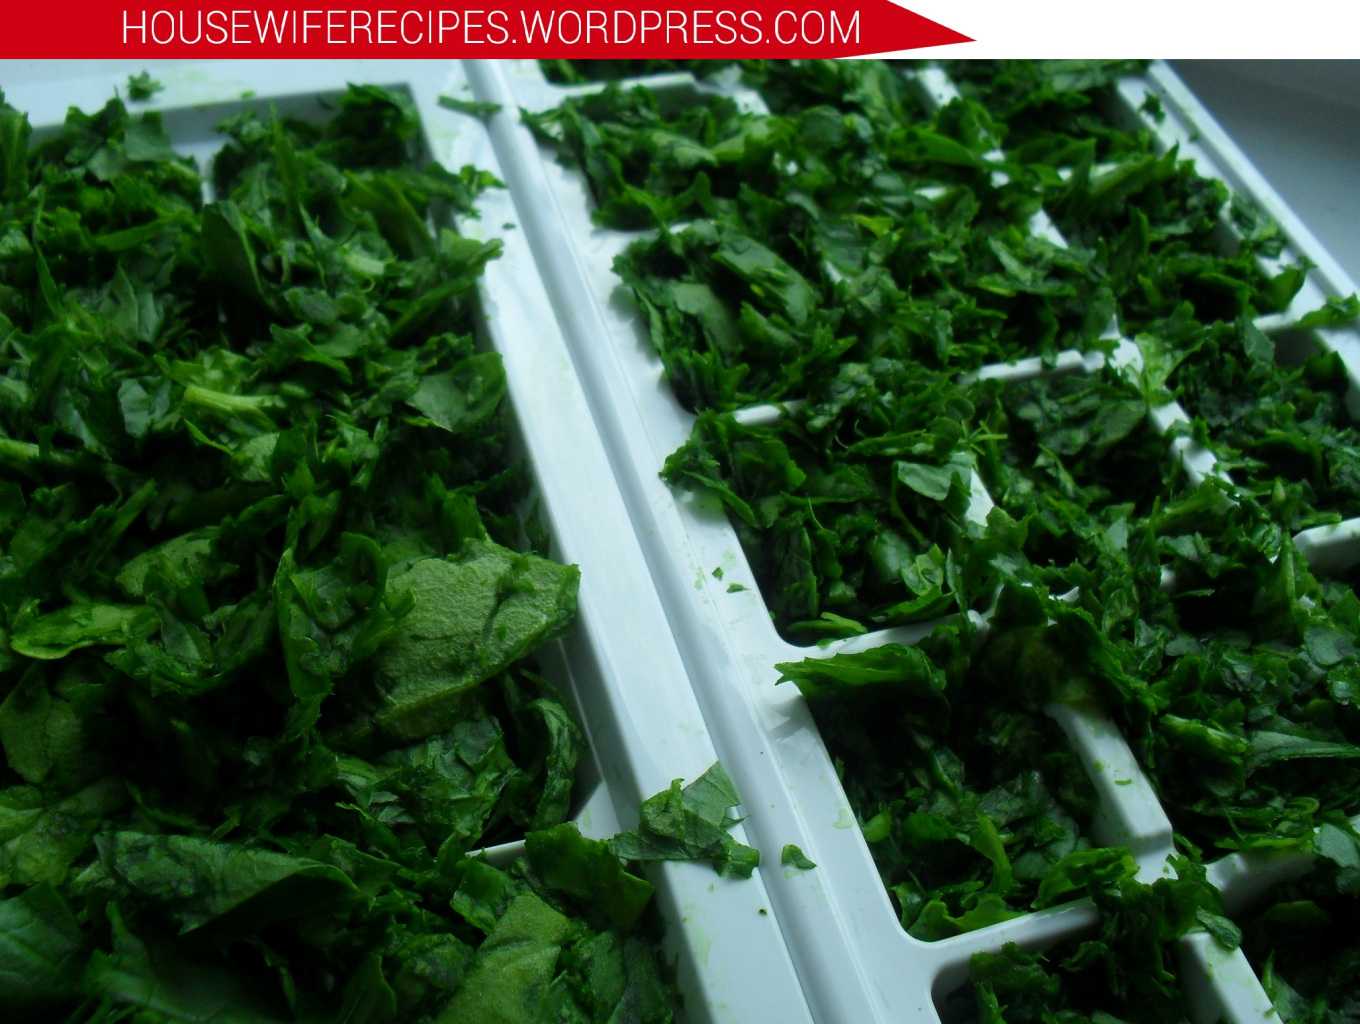 Заморозка шпината на зиму - рецепт, как заготовить зелень в домашних условиях